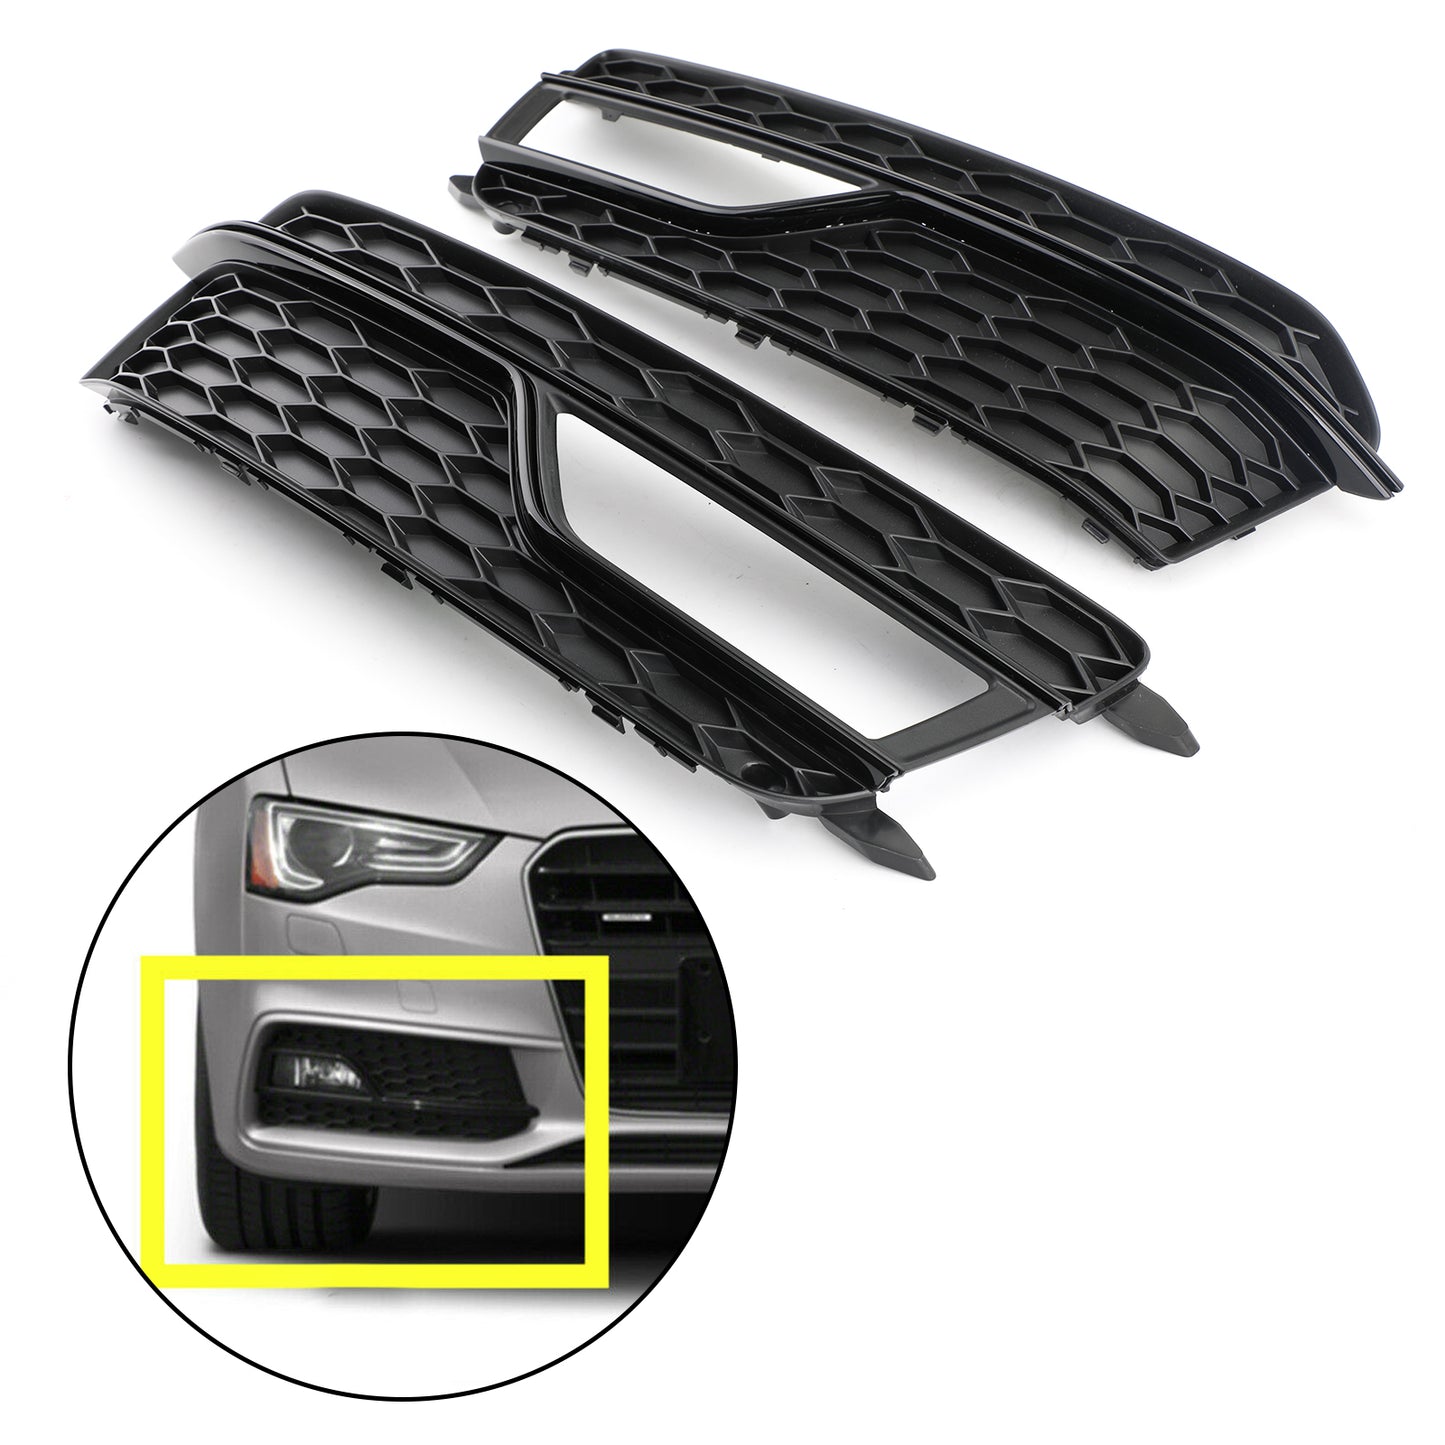 2013-2016 AUDI A5 S-Line/S5 Pair Front Fog Lamp Black Trim Car Grill